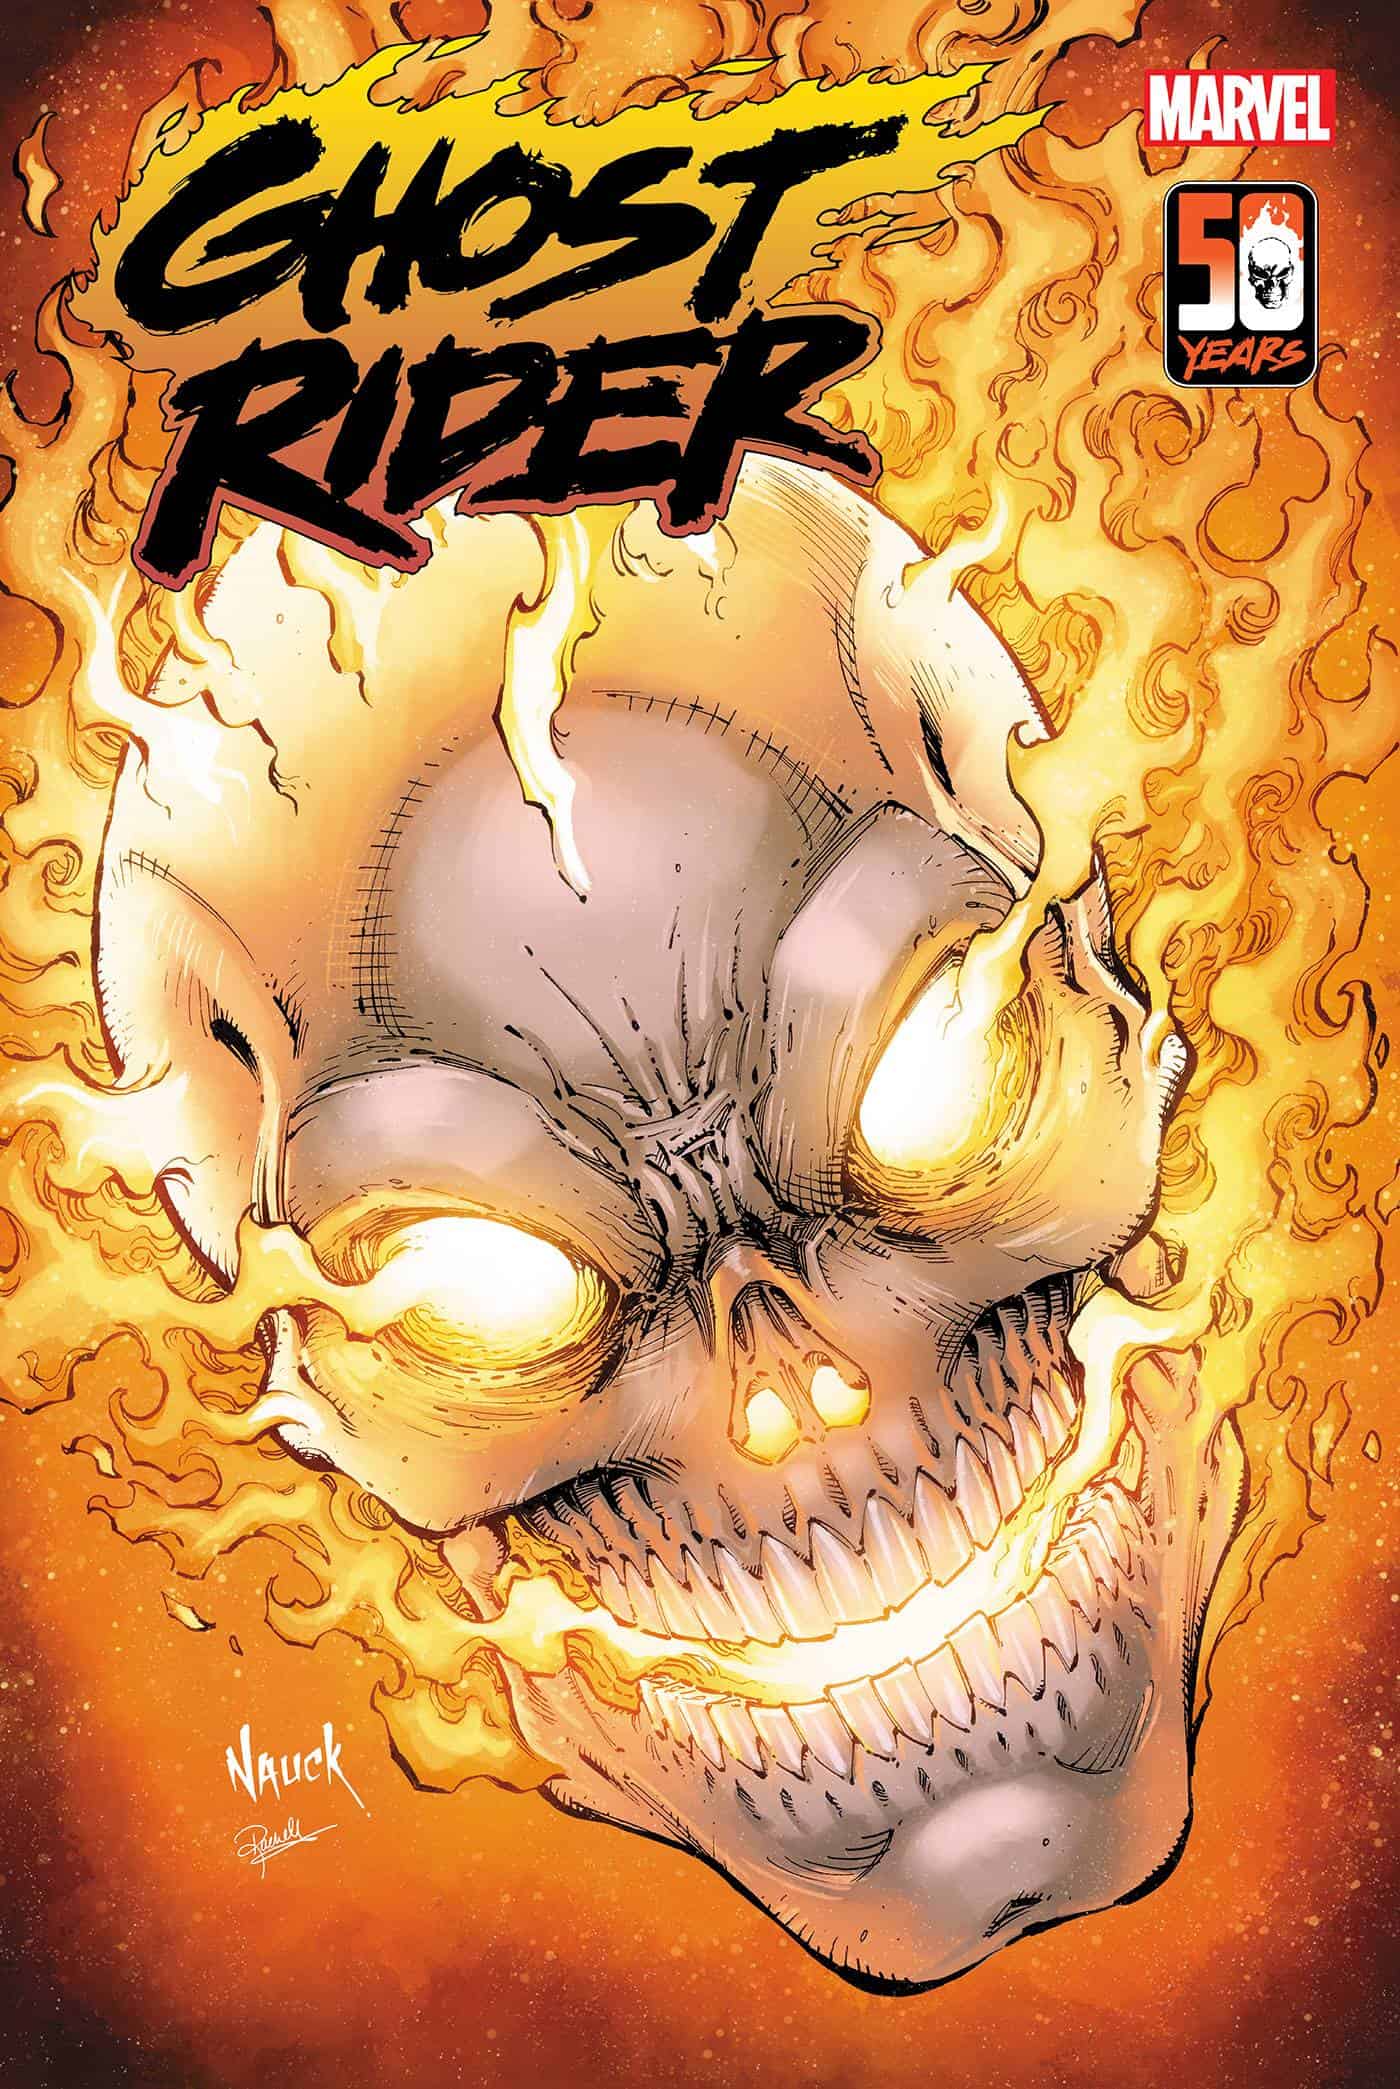 SNEAK PEEK: Preview of Marvel Comics' GHOST RIDER #1 (On Sale 2/23!) - Comic Watch